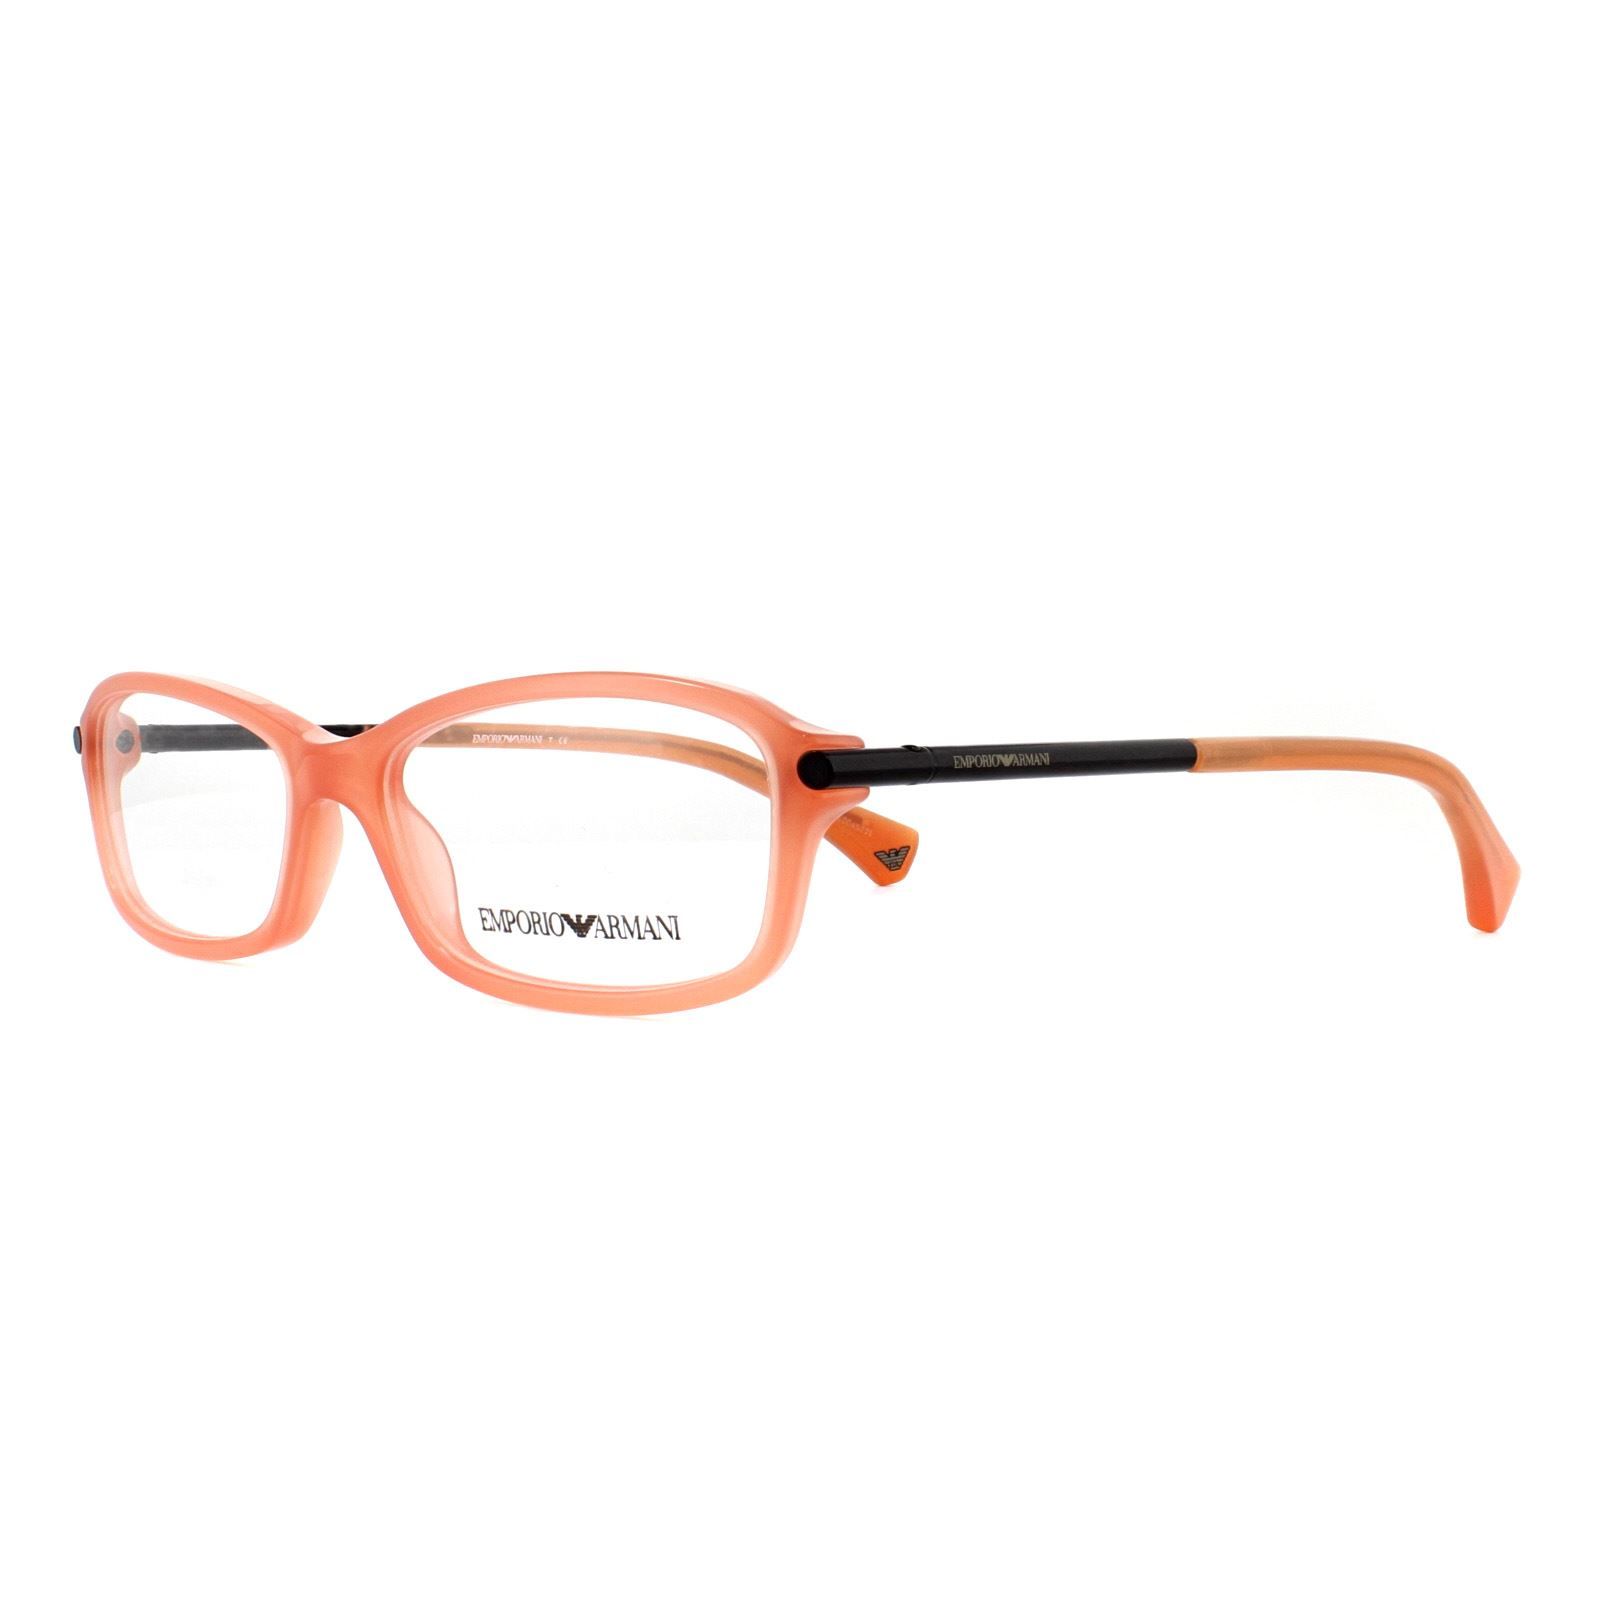 Emporio Armani Glasses Frames EA 3006 5083 Opal Red Coral 51mm Womens